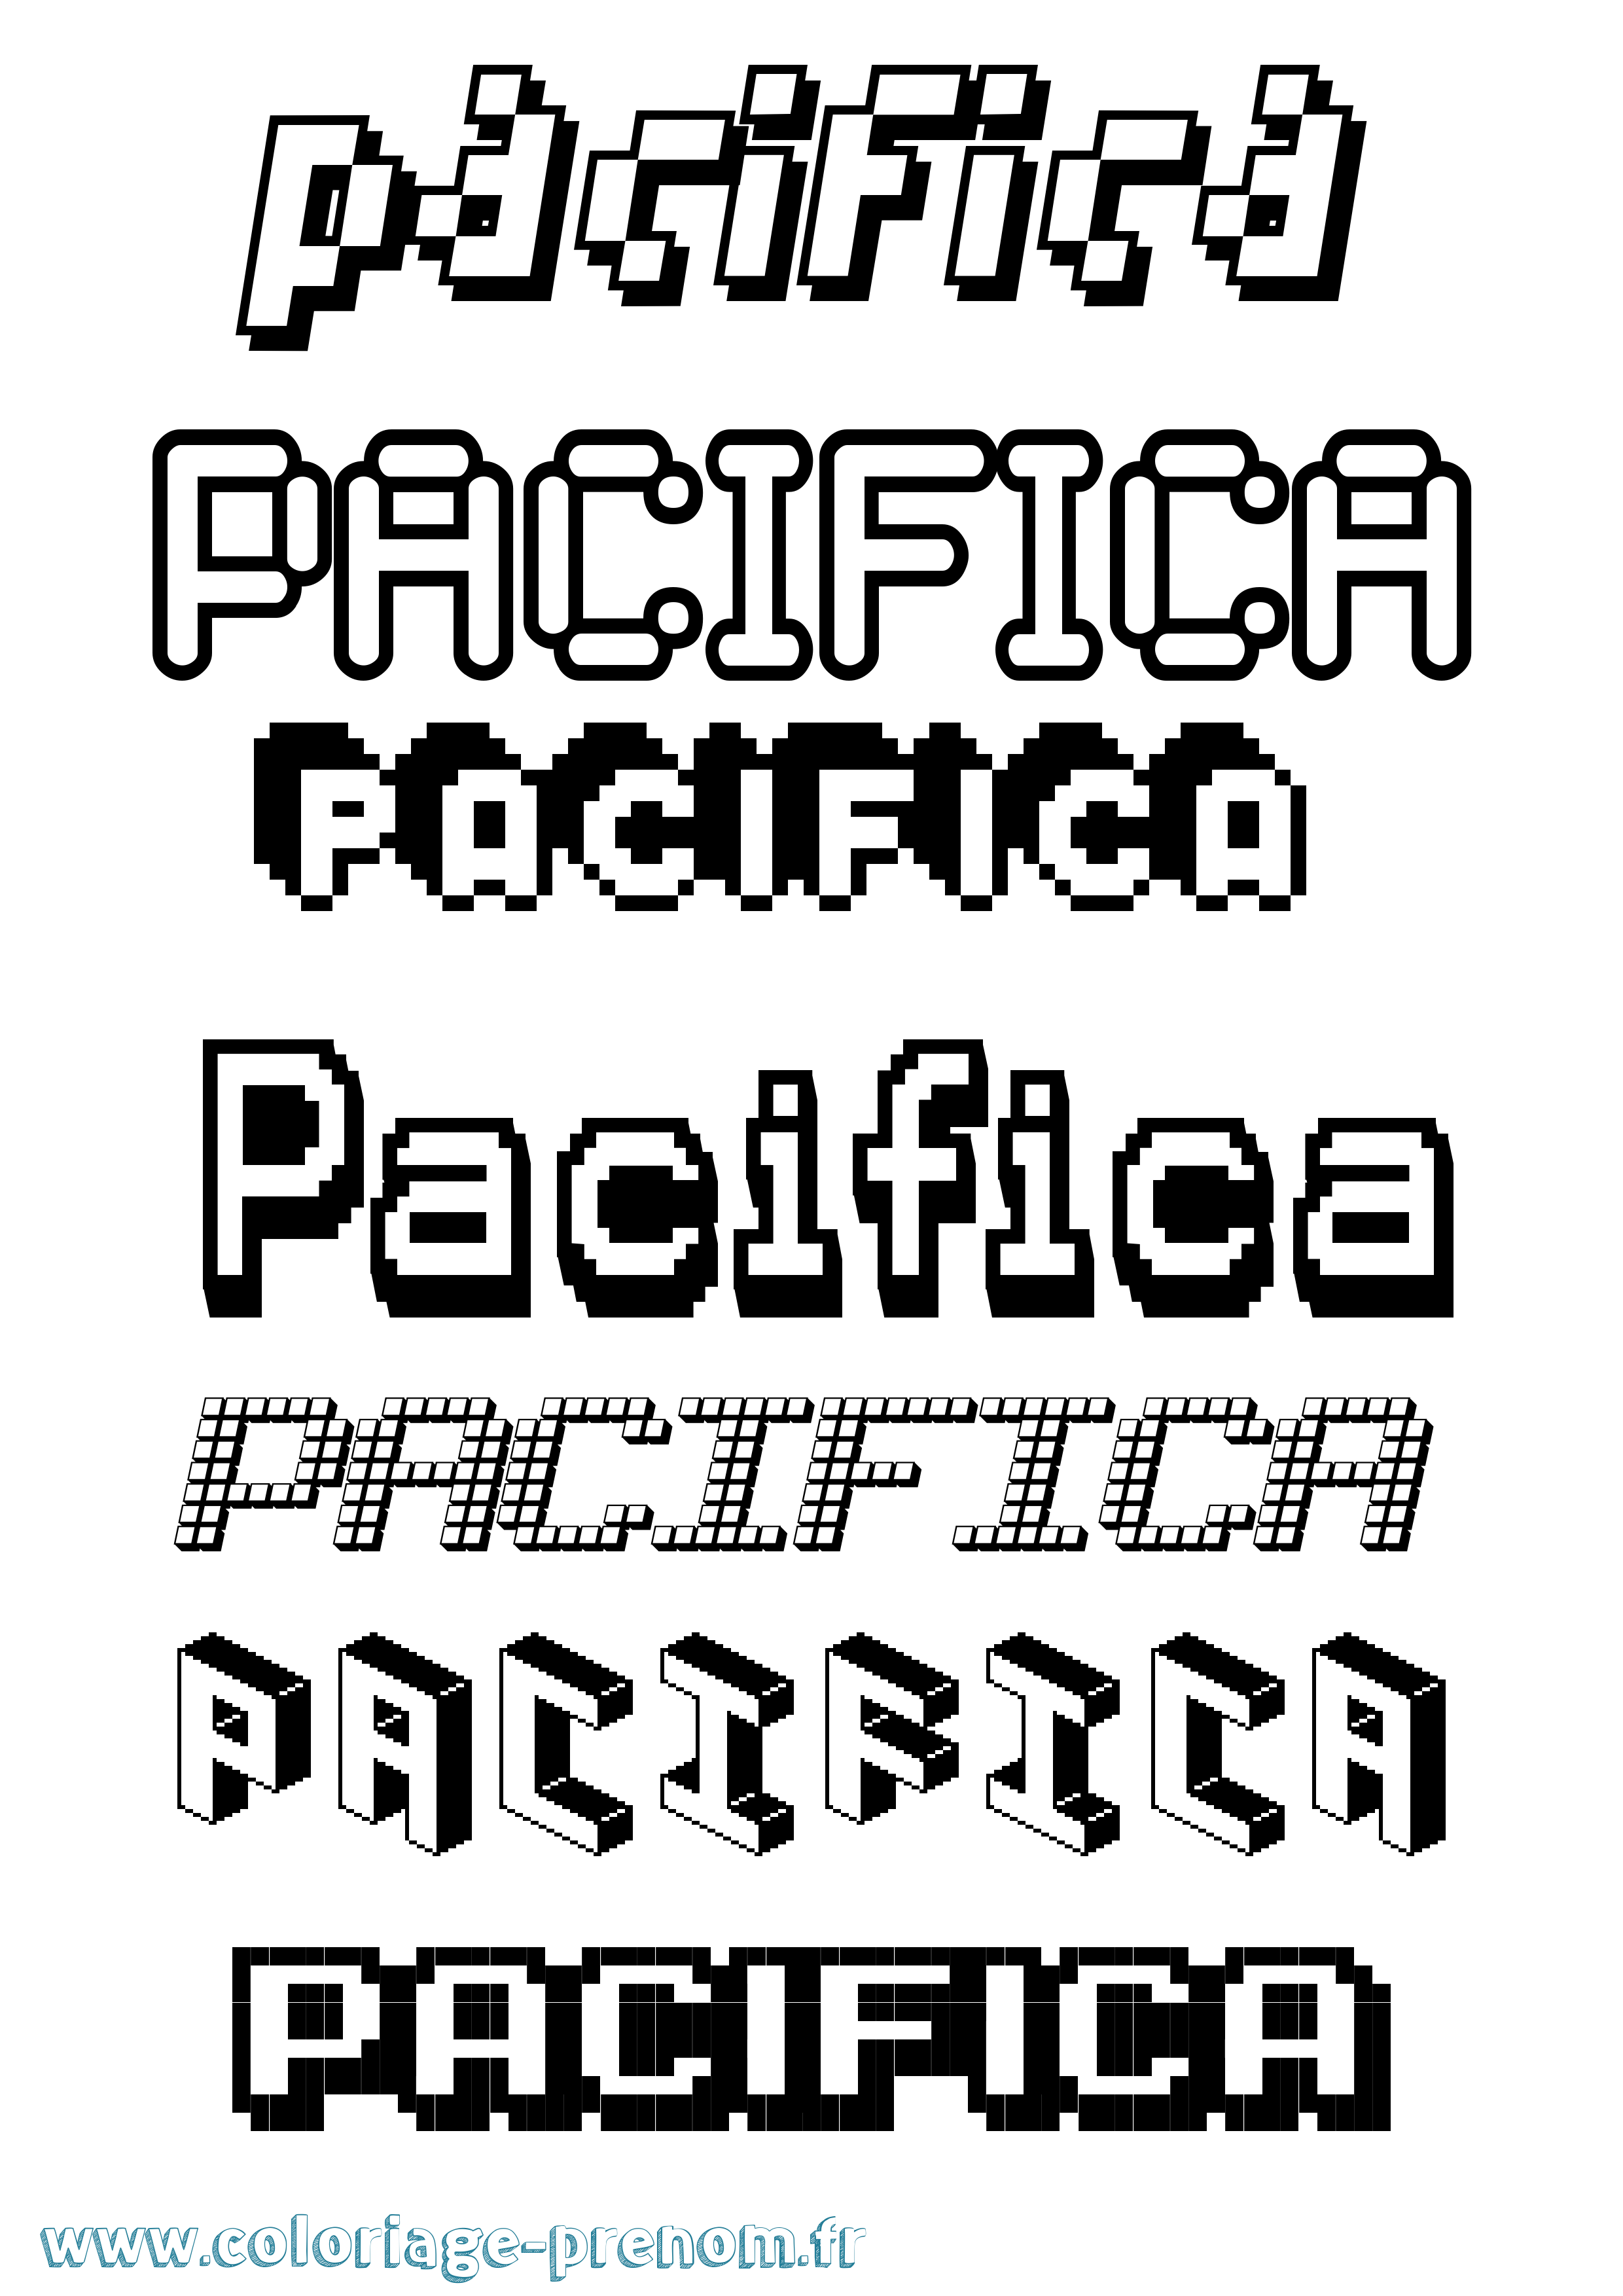 Coloriage prénom Pacifica Pixel